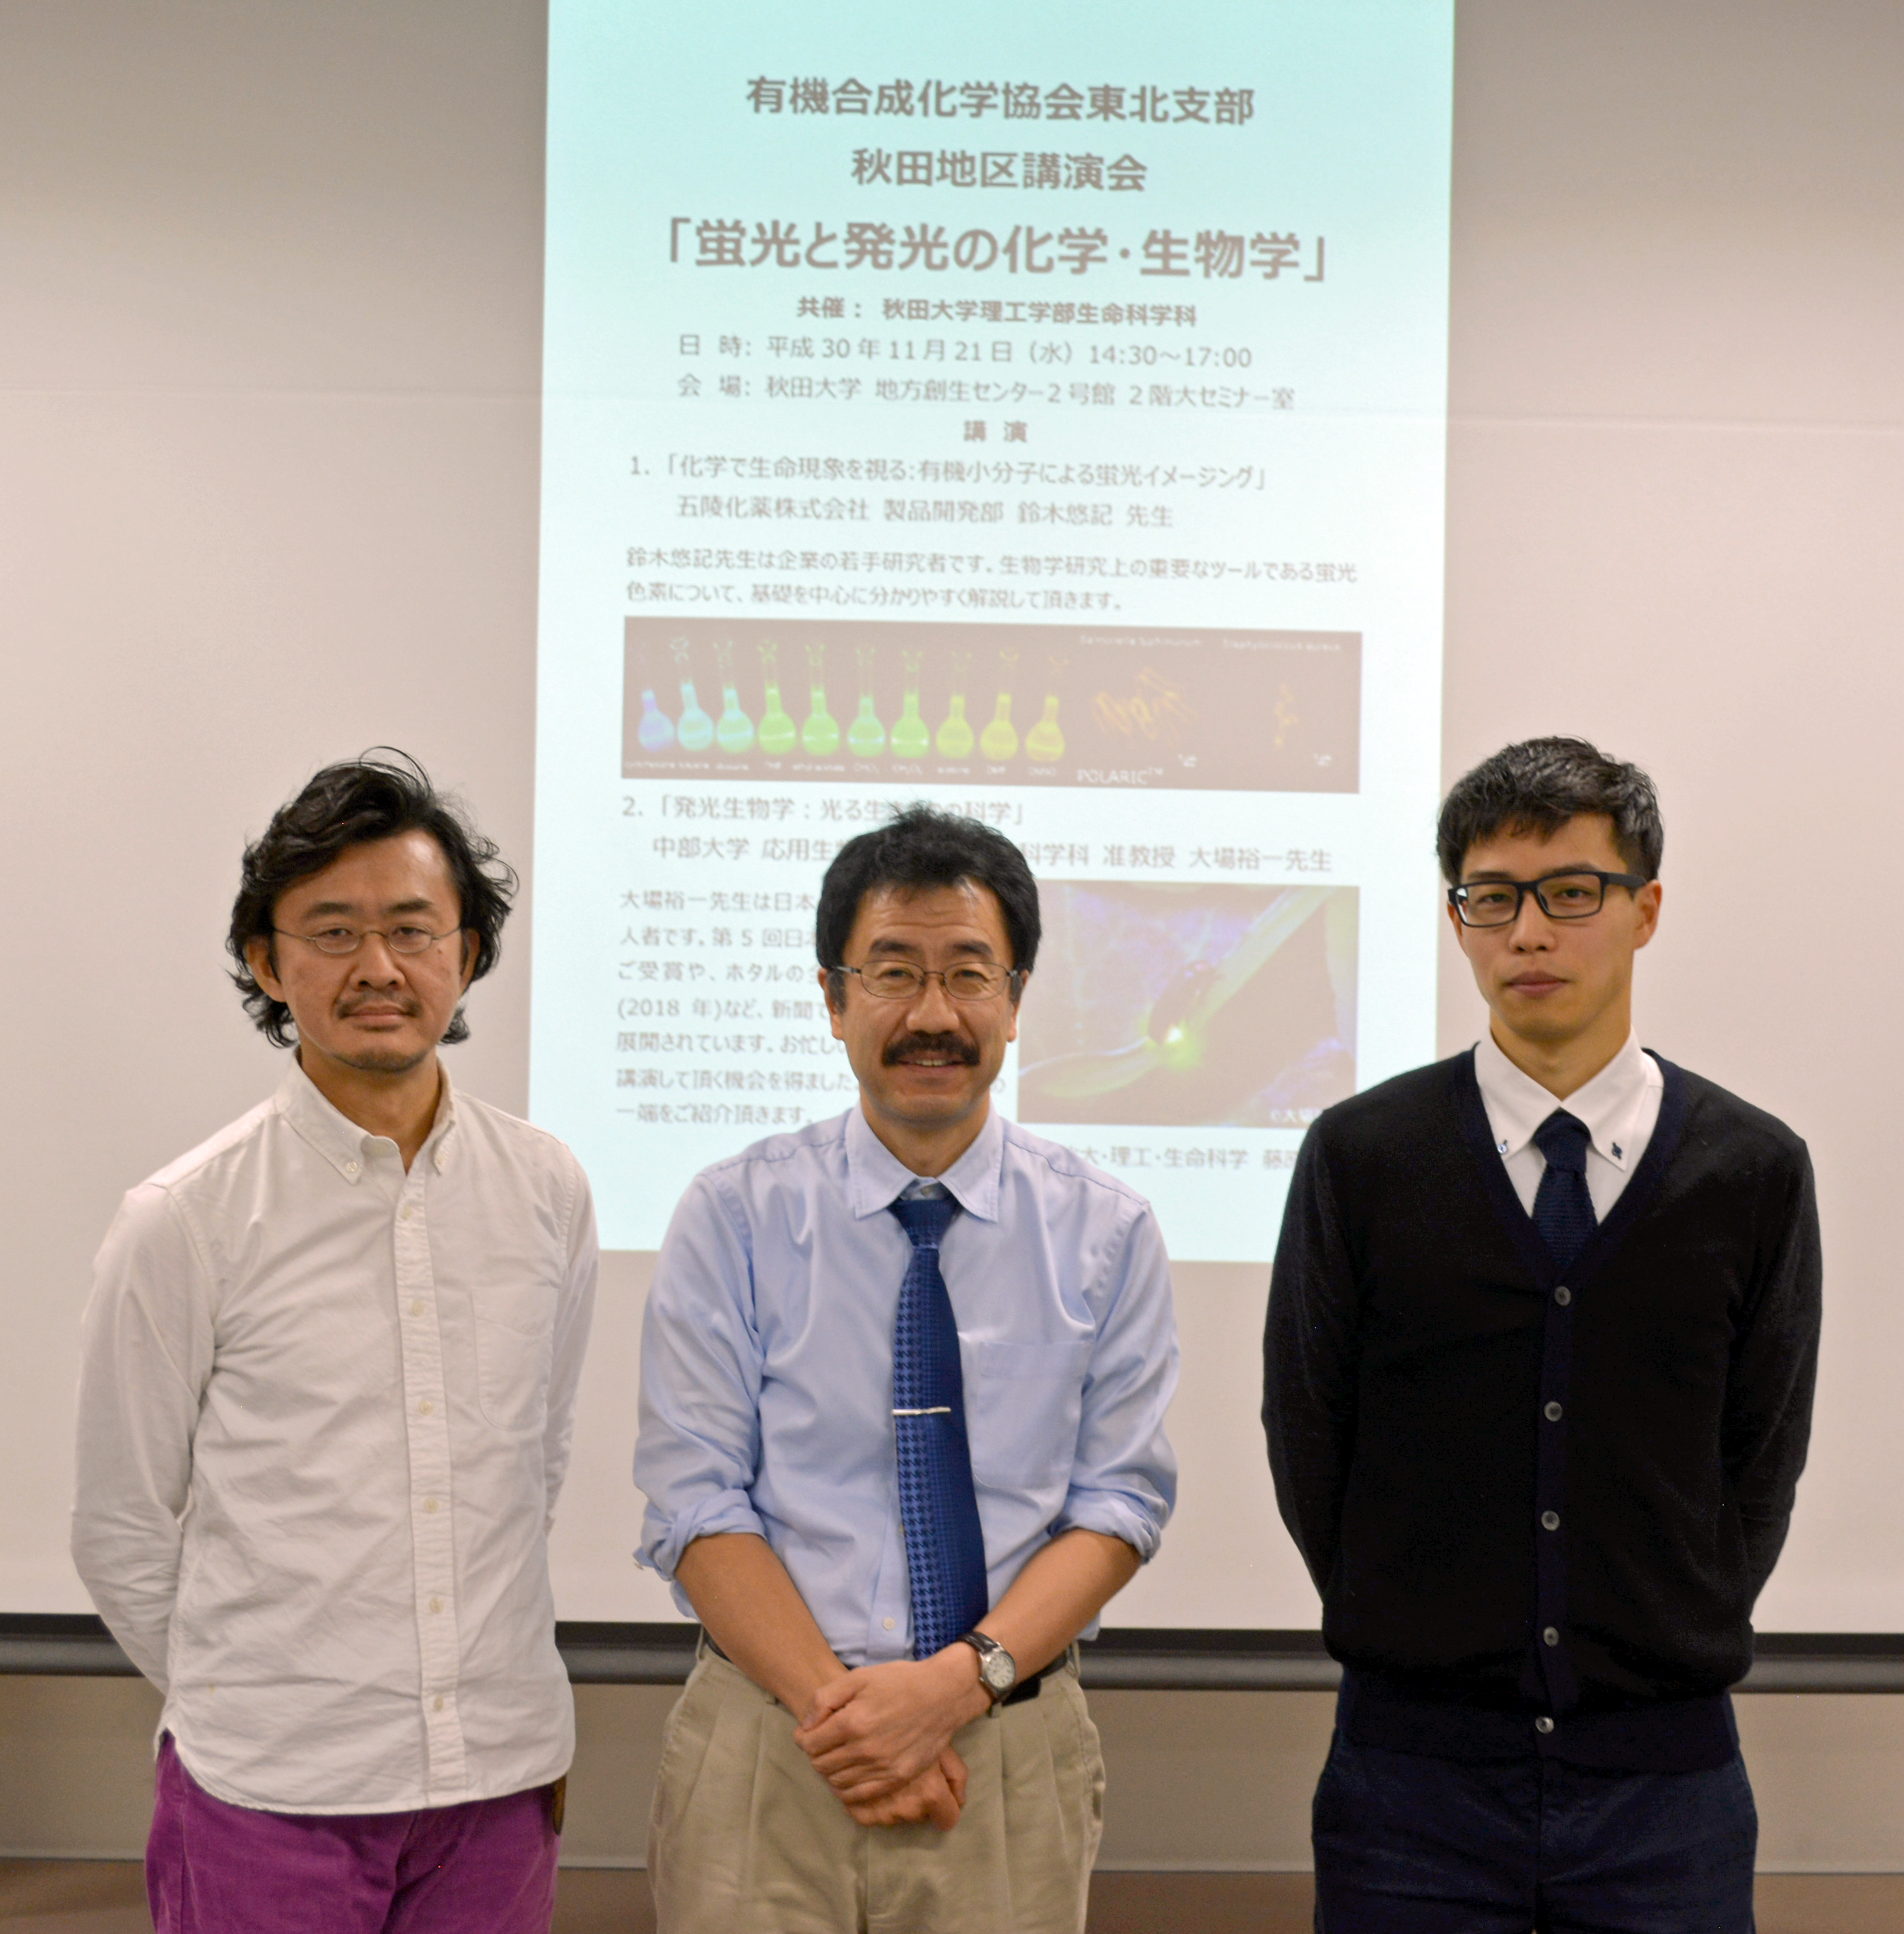 Prof. Oba, Prof. Fujiwara and Dr. Suzuki